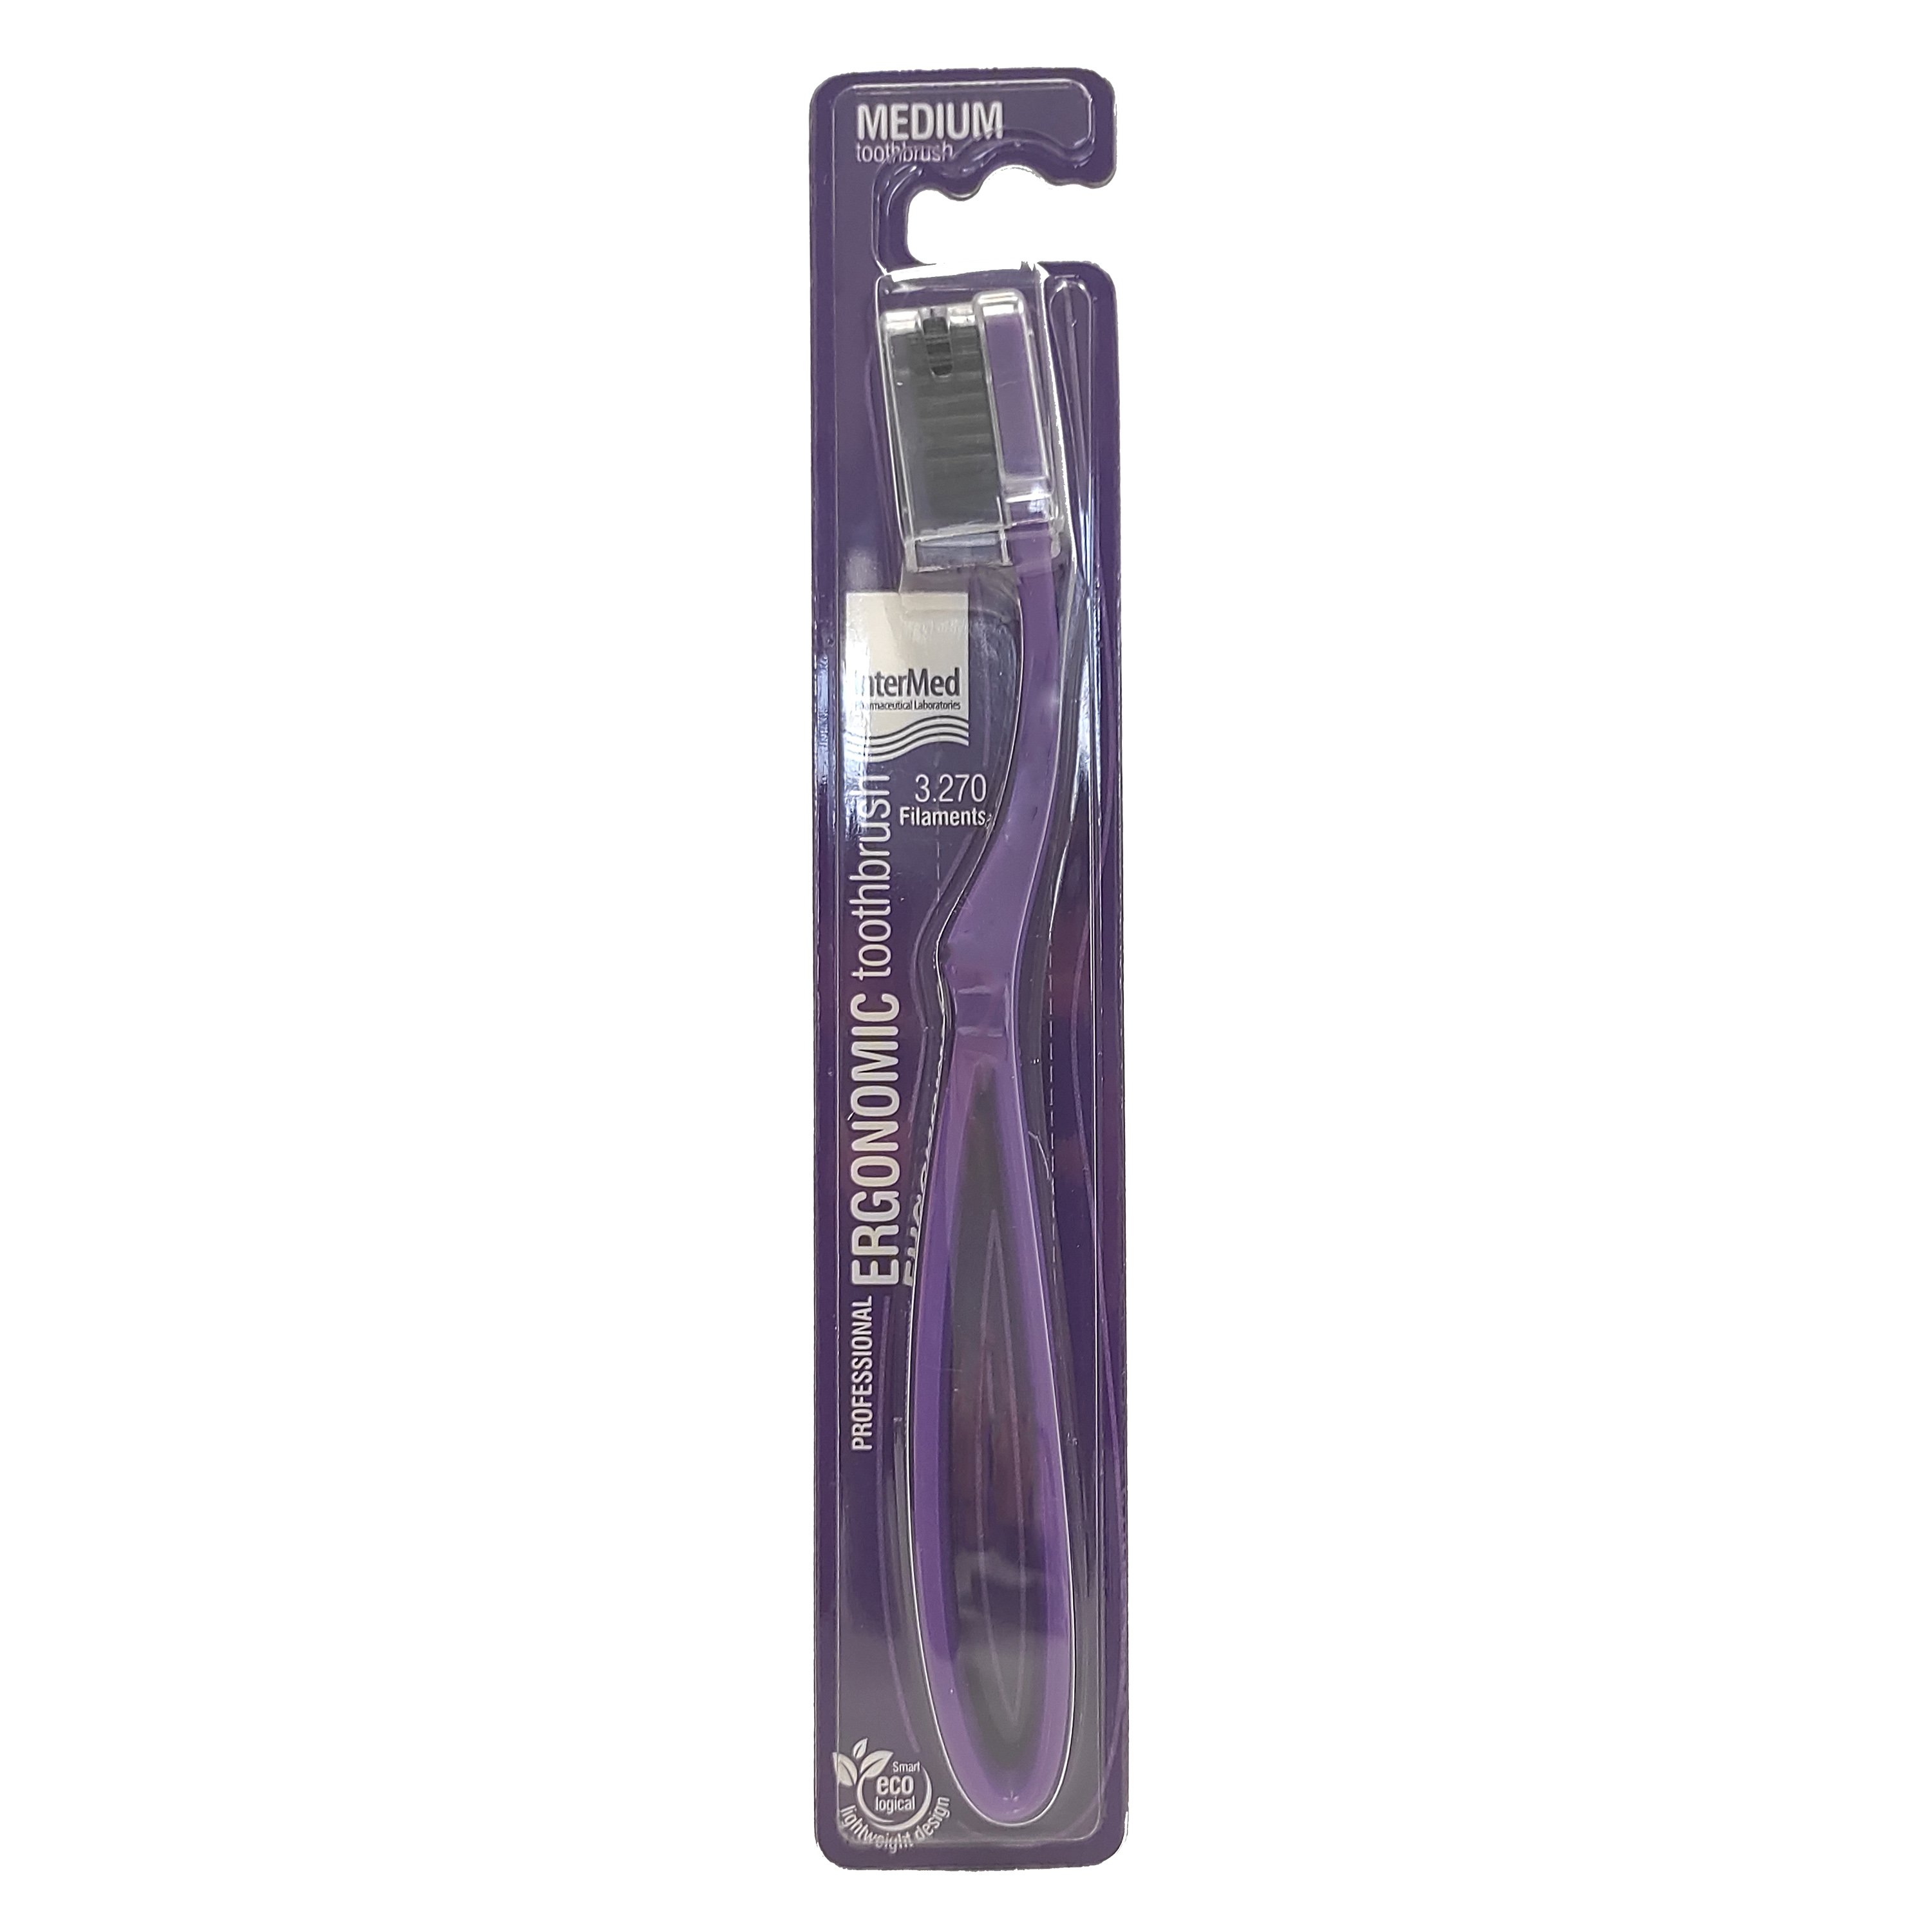 Intermed Professional Ergonomic Toothbrush Medium Επαγγελματική Εργονομική Οδοντόβουρτσα, 1 Τεμάχιο – μωβ